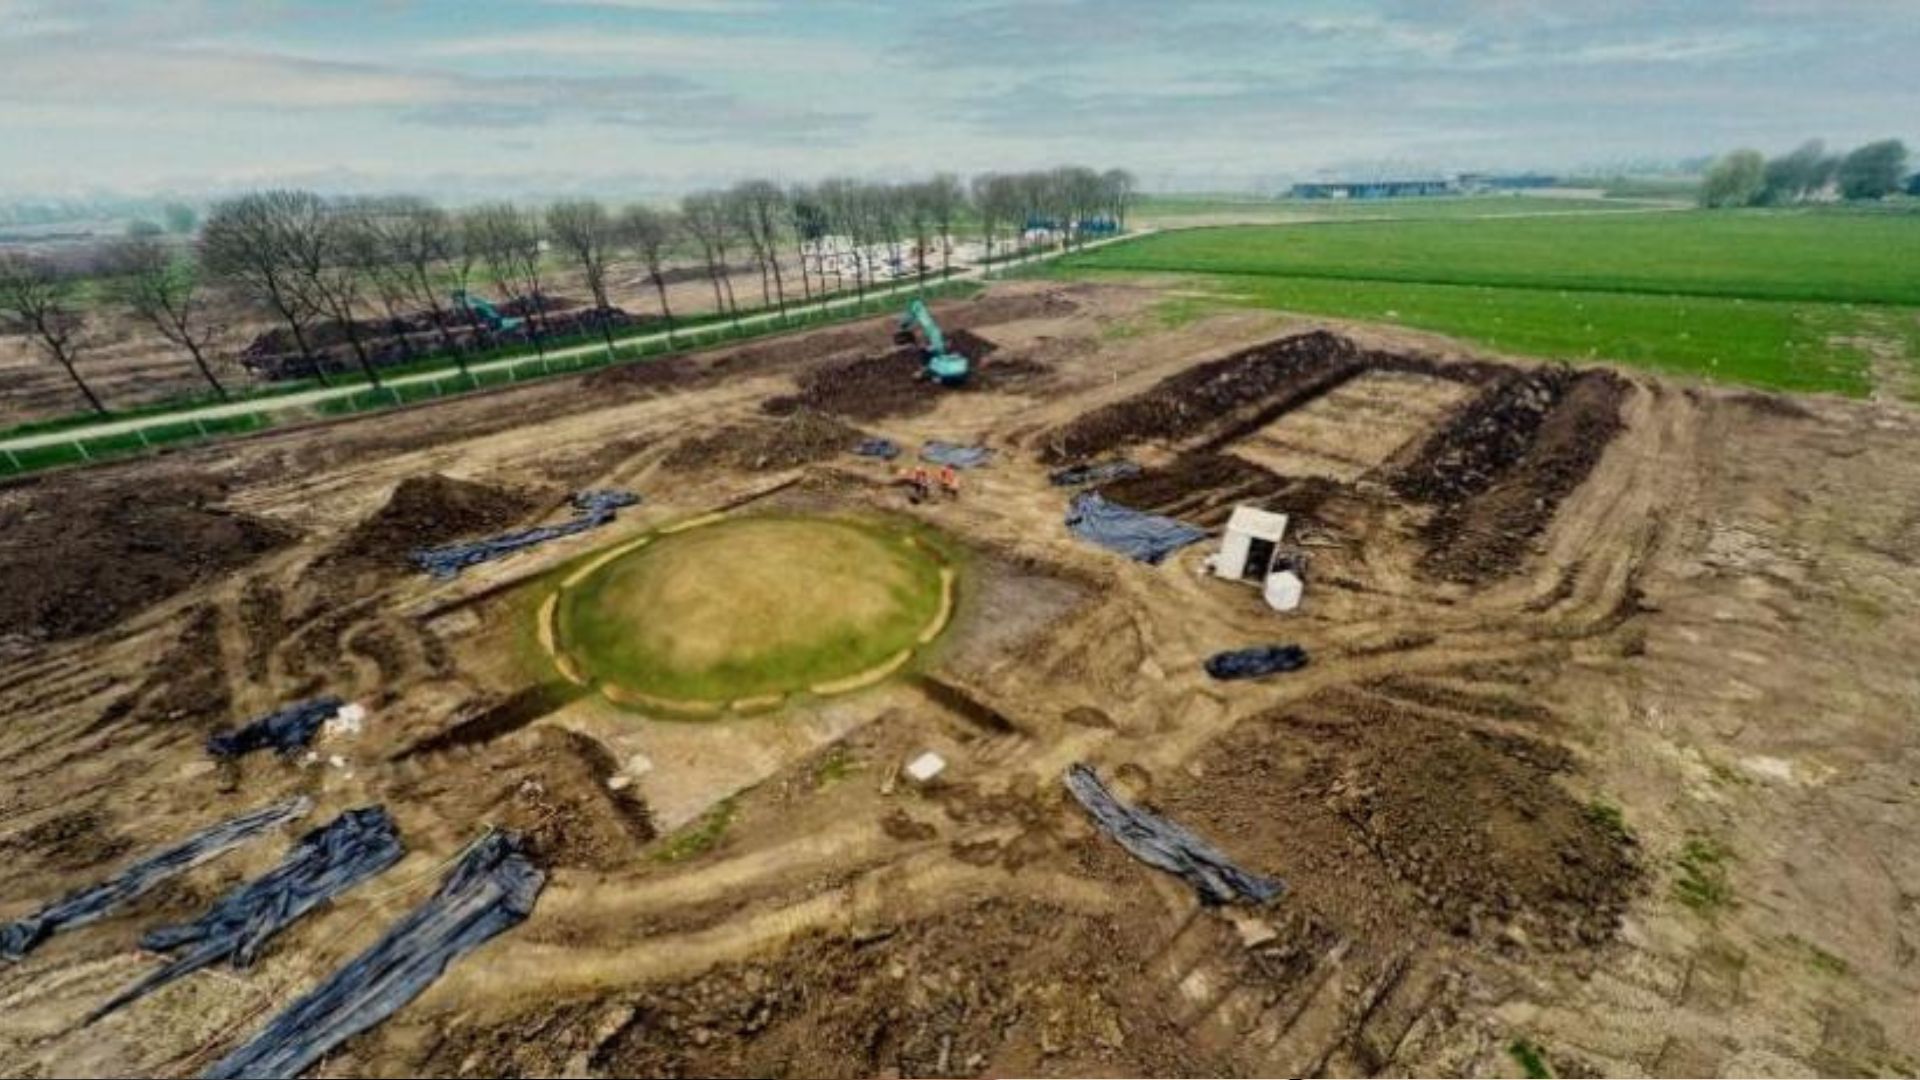 The site of 'Stonehenge of the Netherlands' /Gemeente Tiel